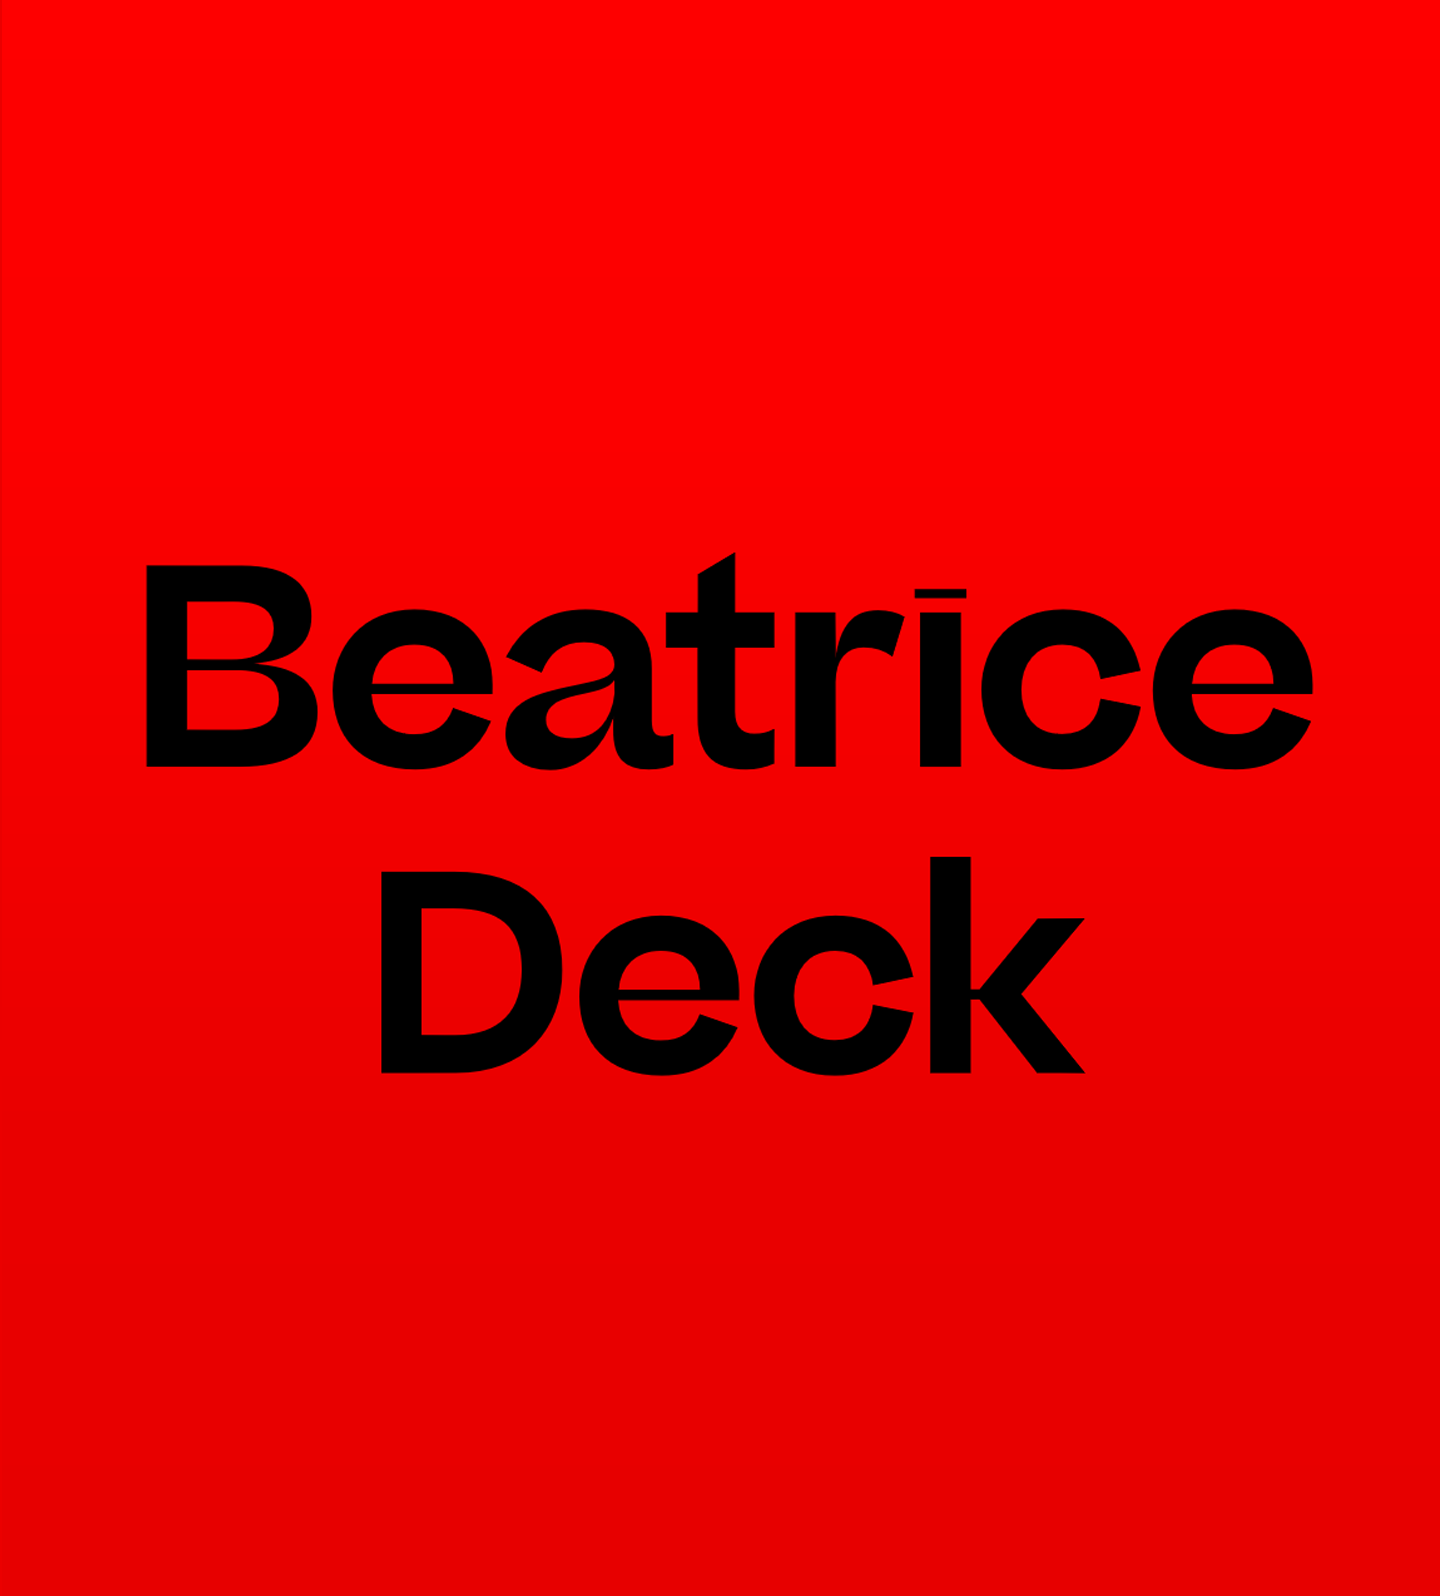 Police Beatrice Deck